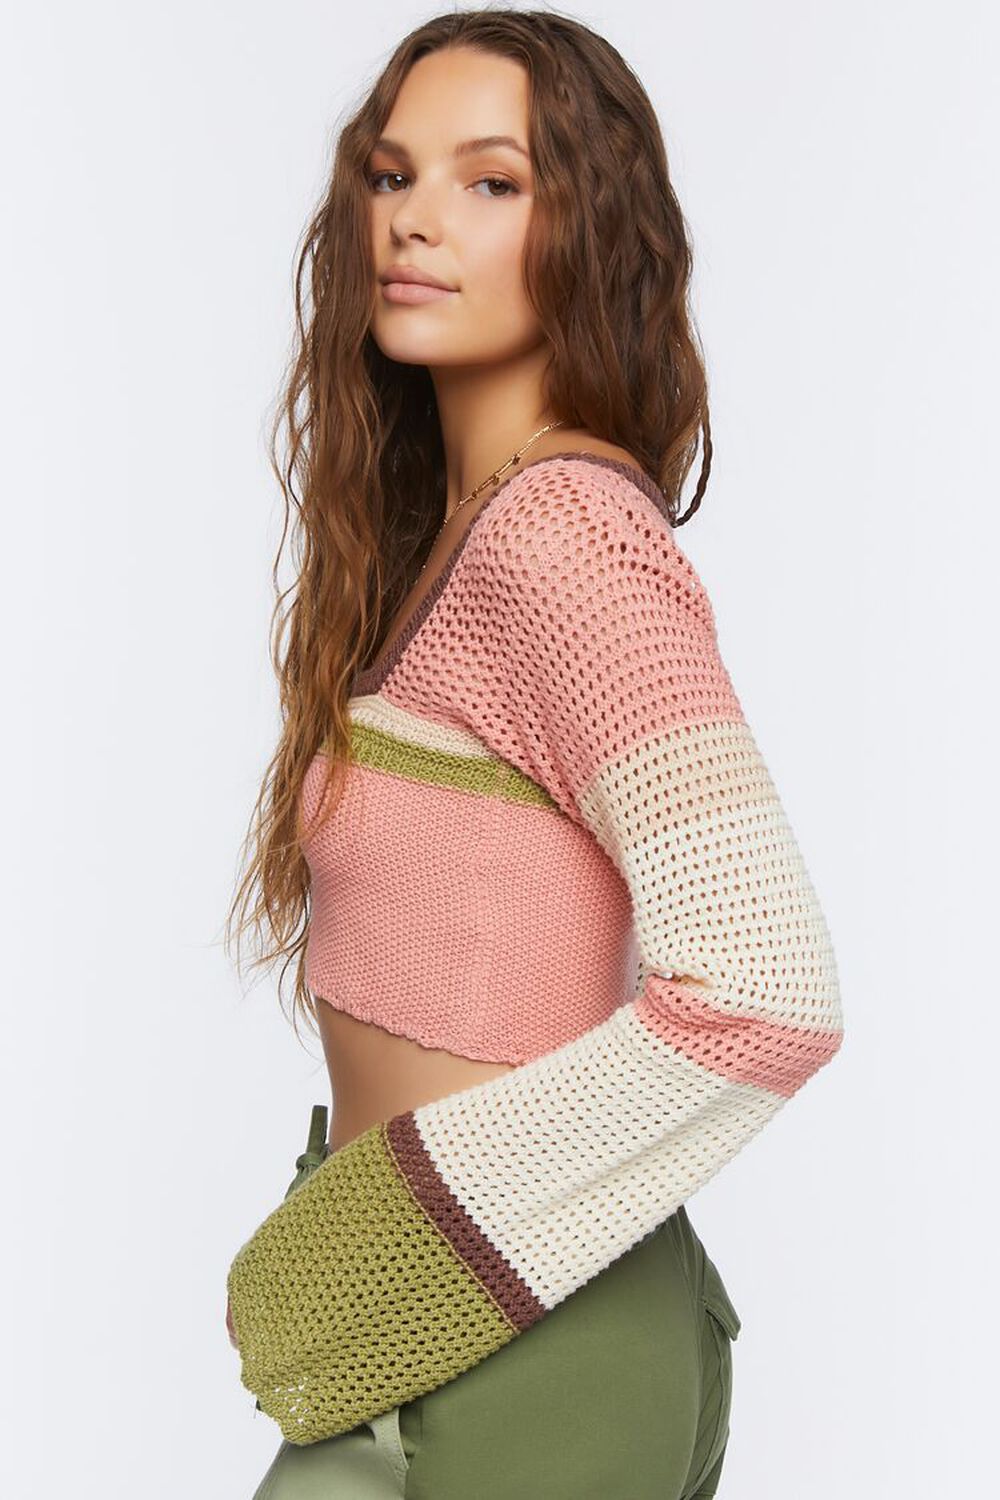 BLUSH/MULTI Colorblock Crochet Crop Top, image 2